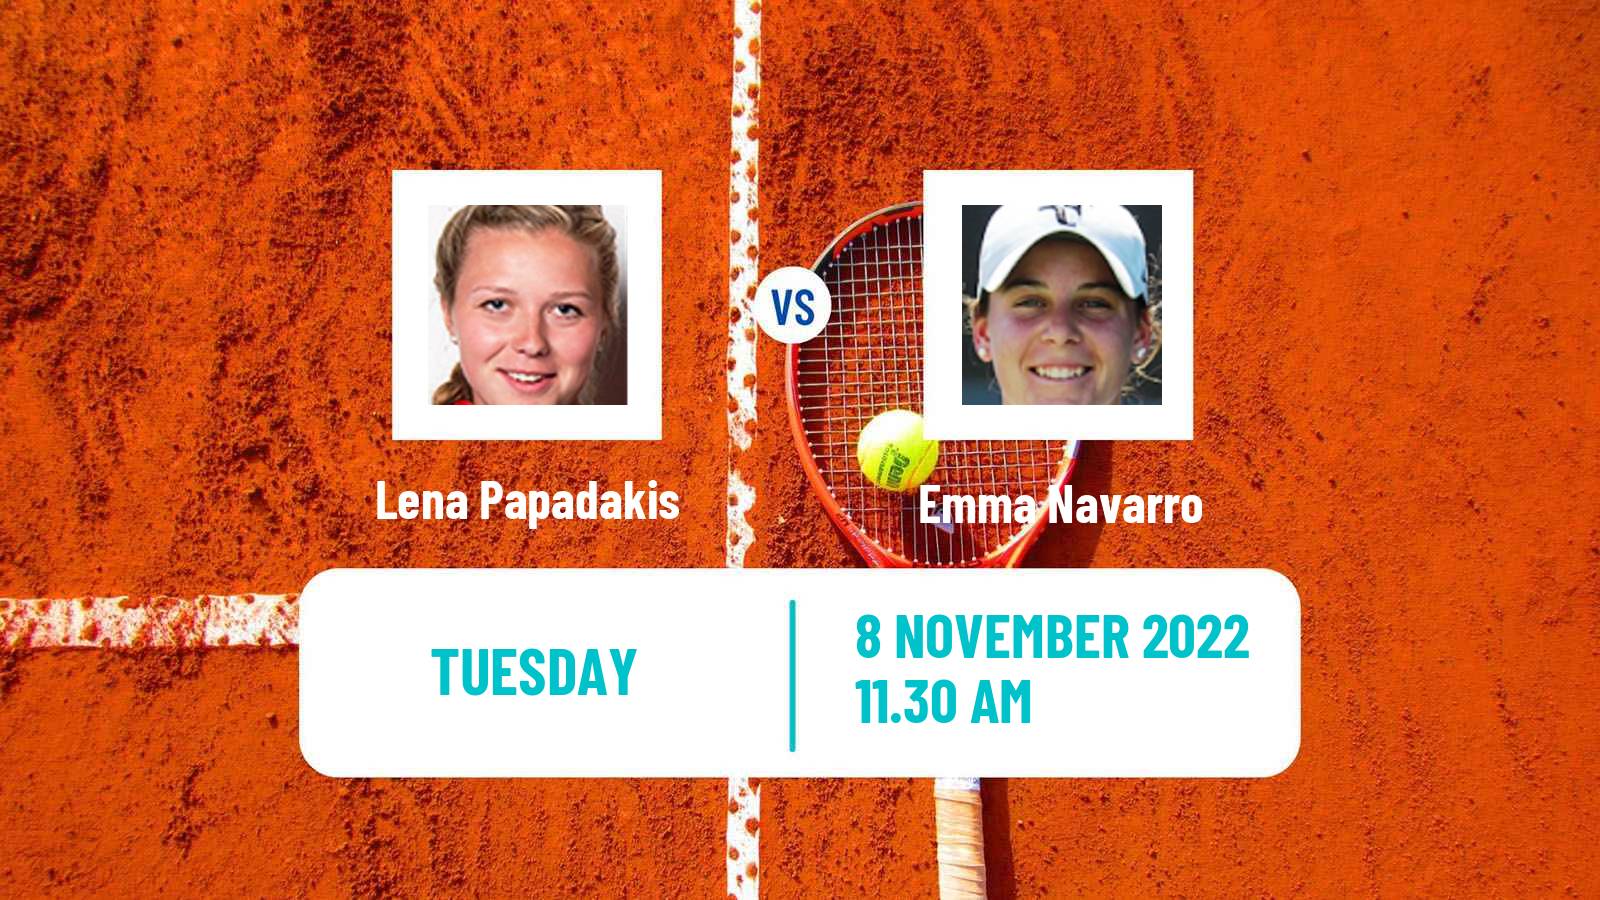 Tennis ATP Challenger Lena Papadakis - Emma Navarro